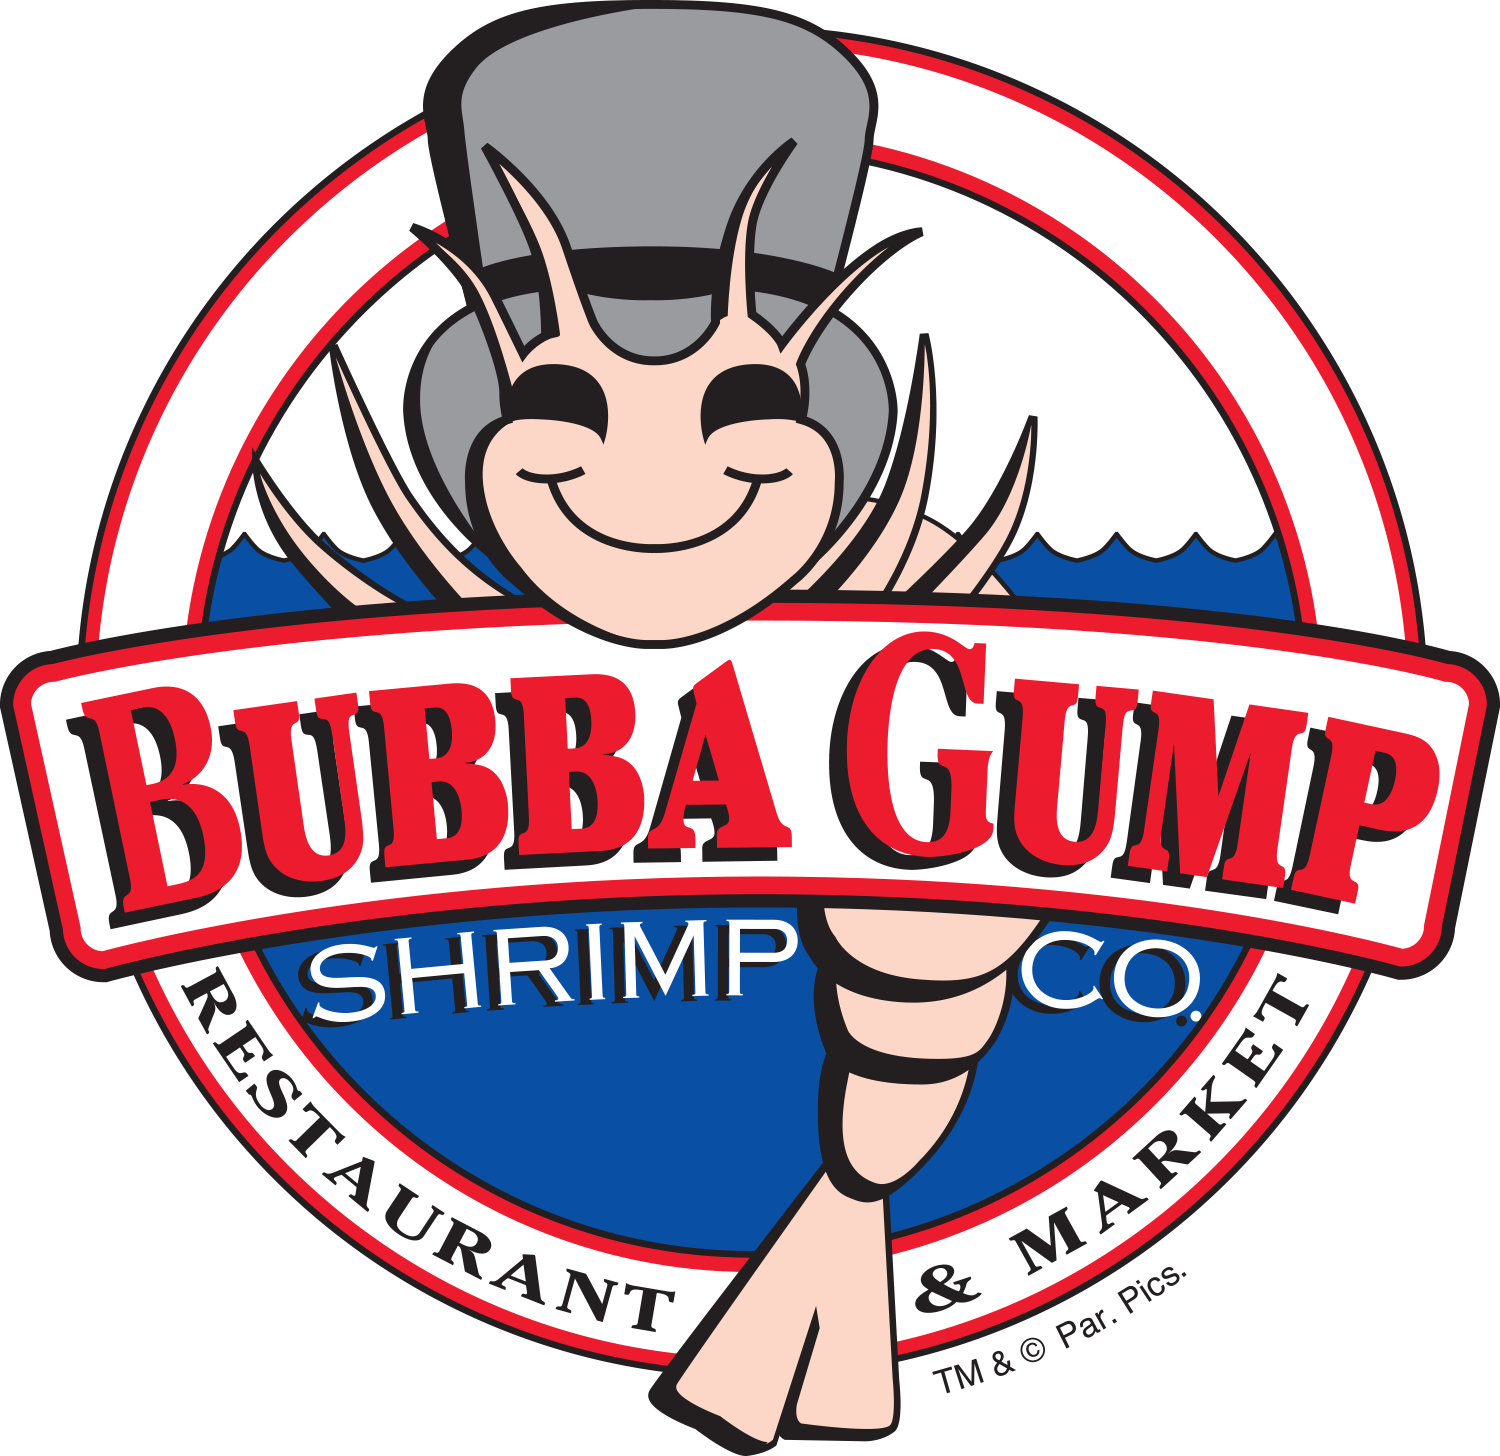 Bubba Gump Shrimp Co (1500x1456)